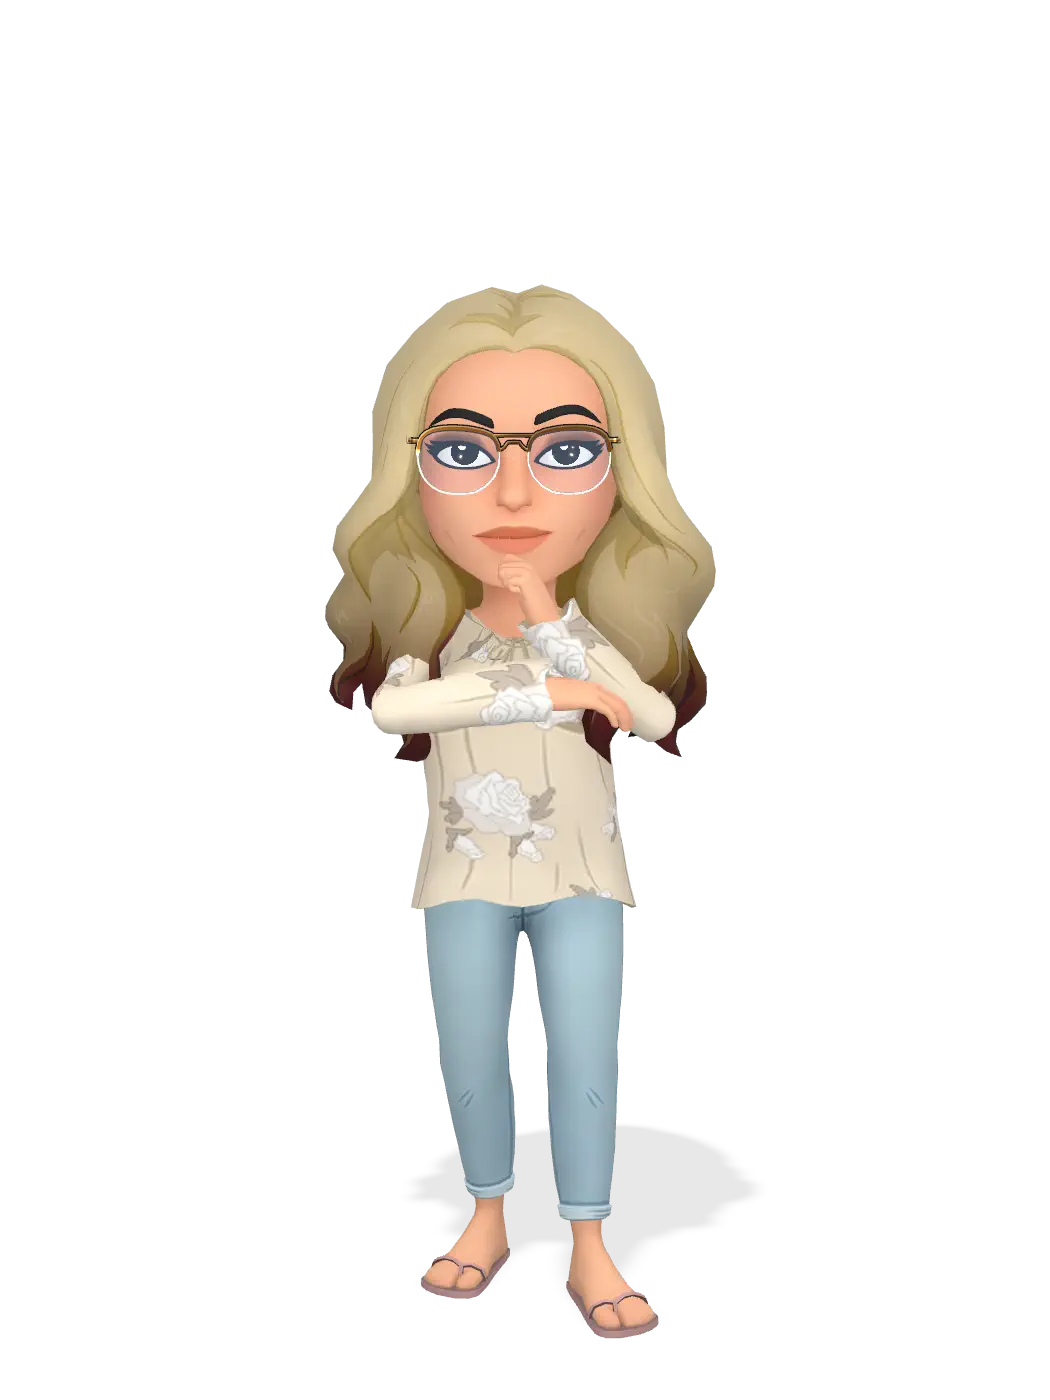 3D Bitmoji for jackswritermom avatar